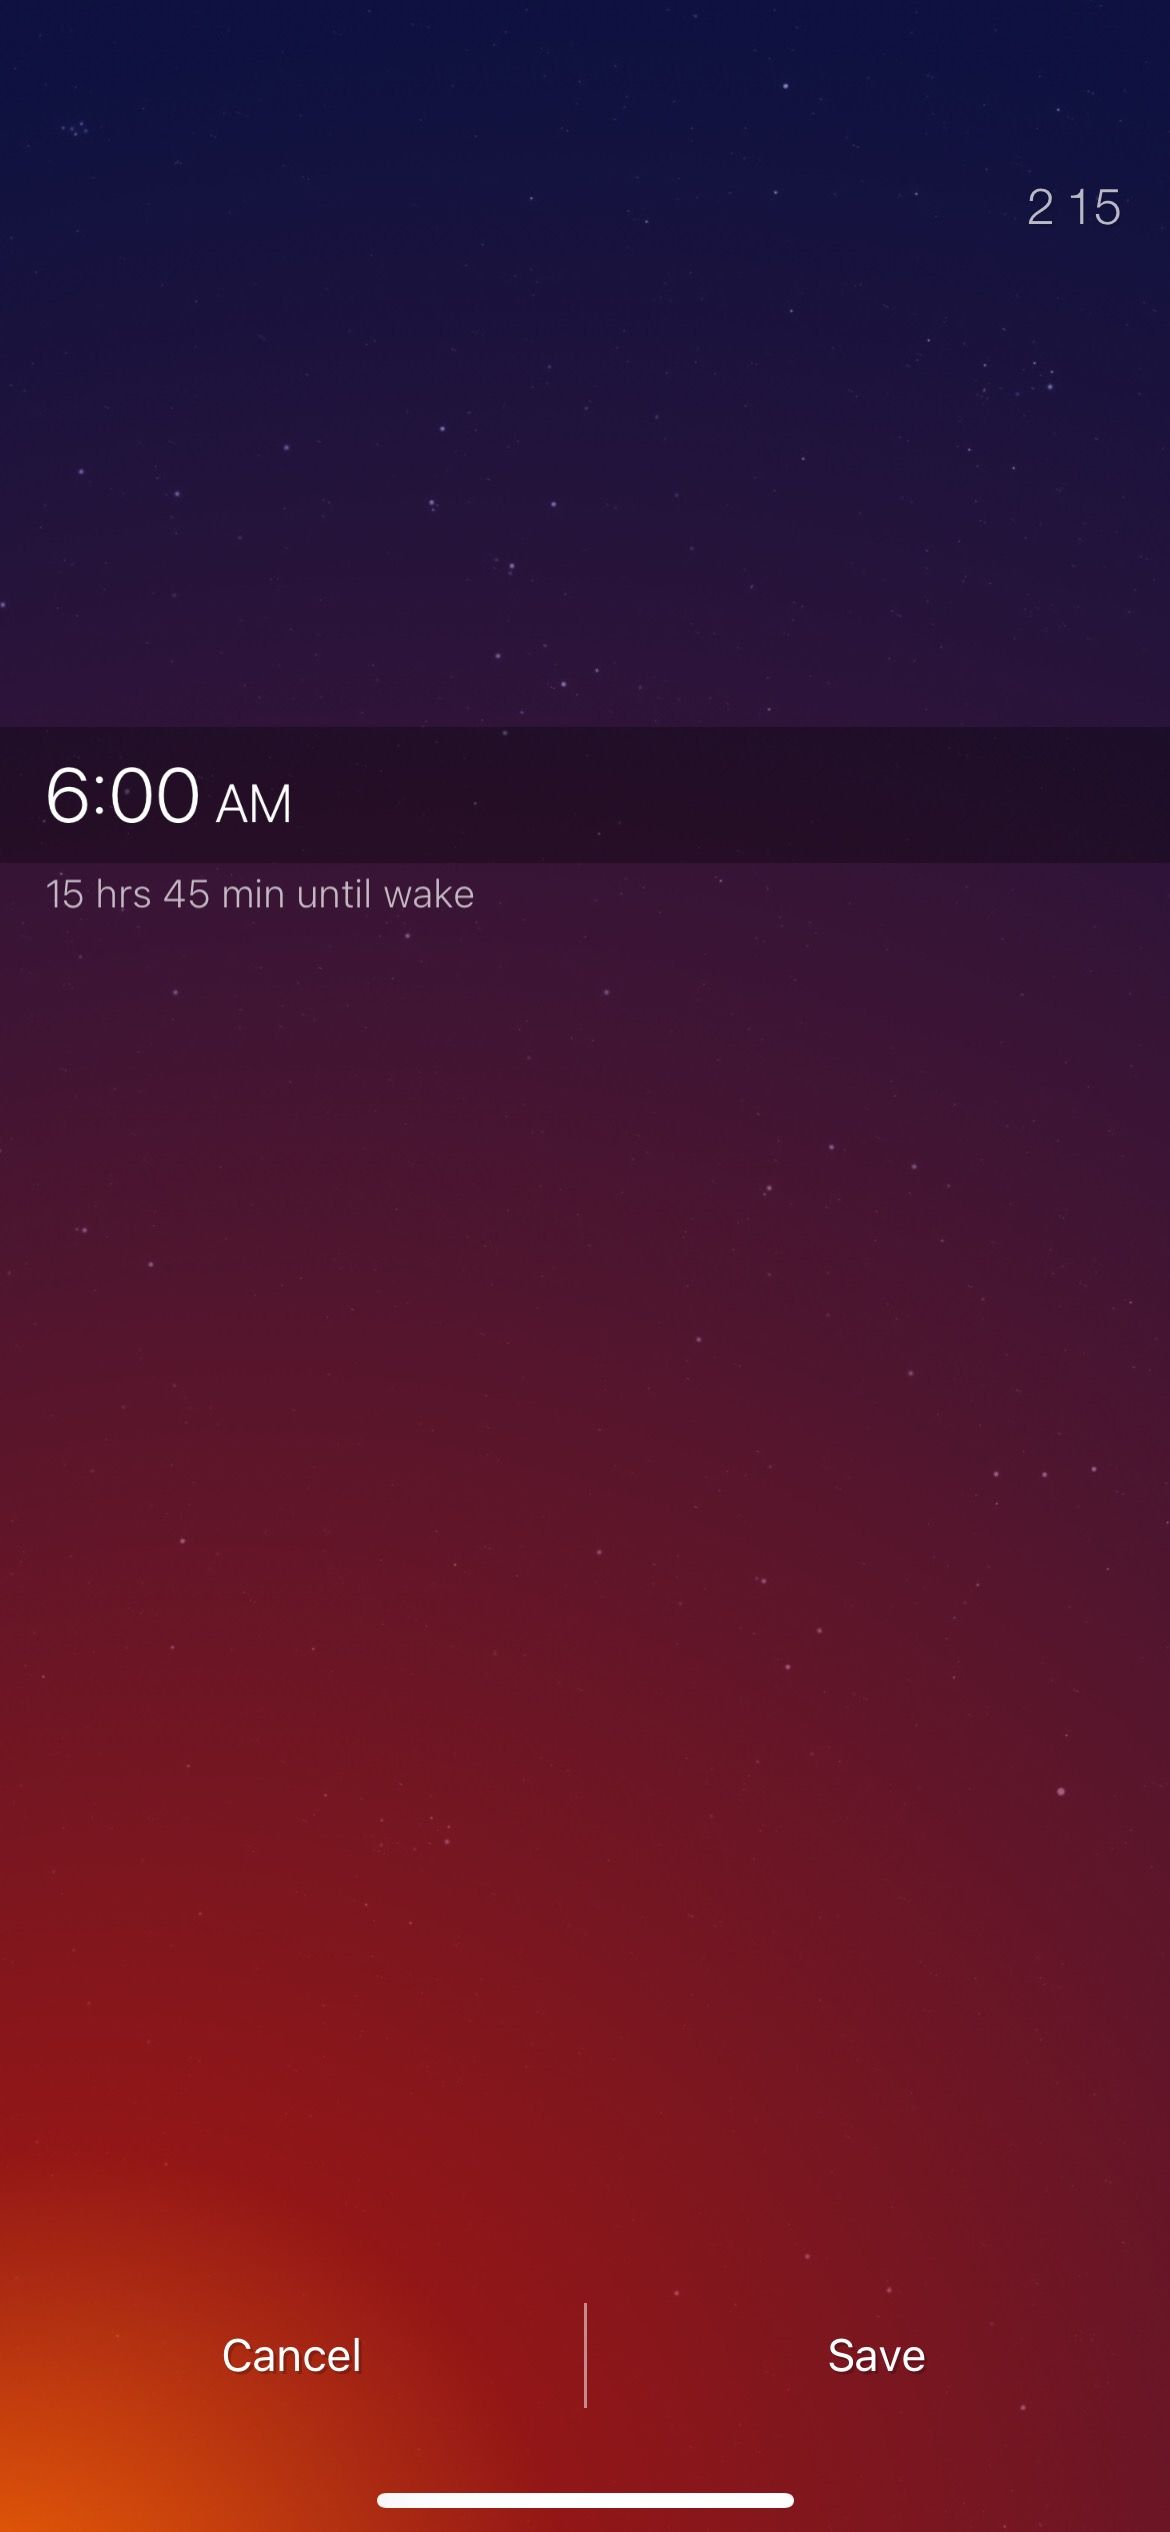 set alarm time in loud alarm clock app